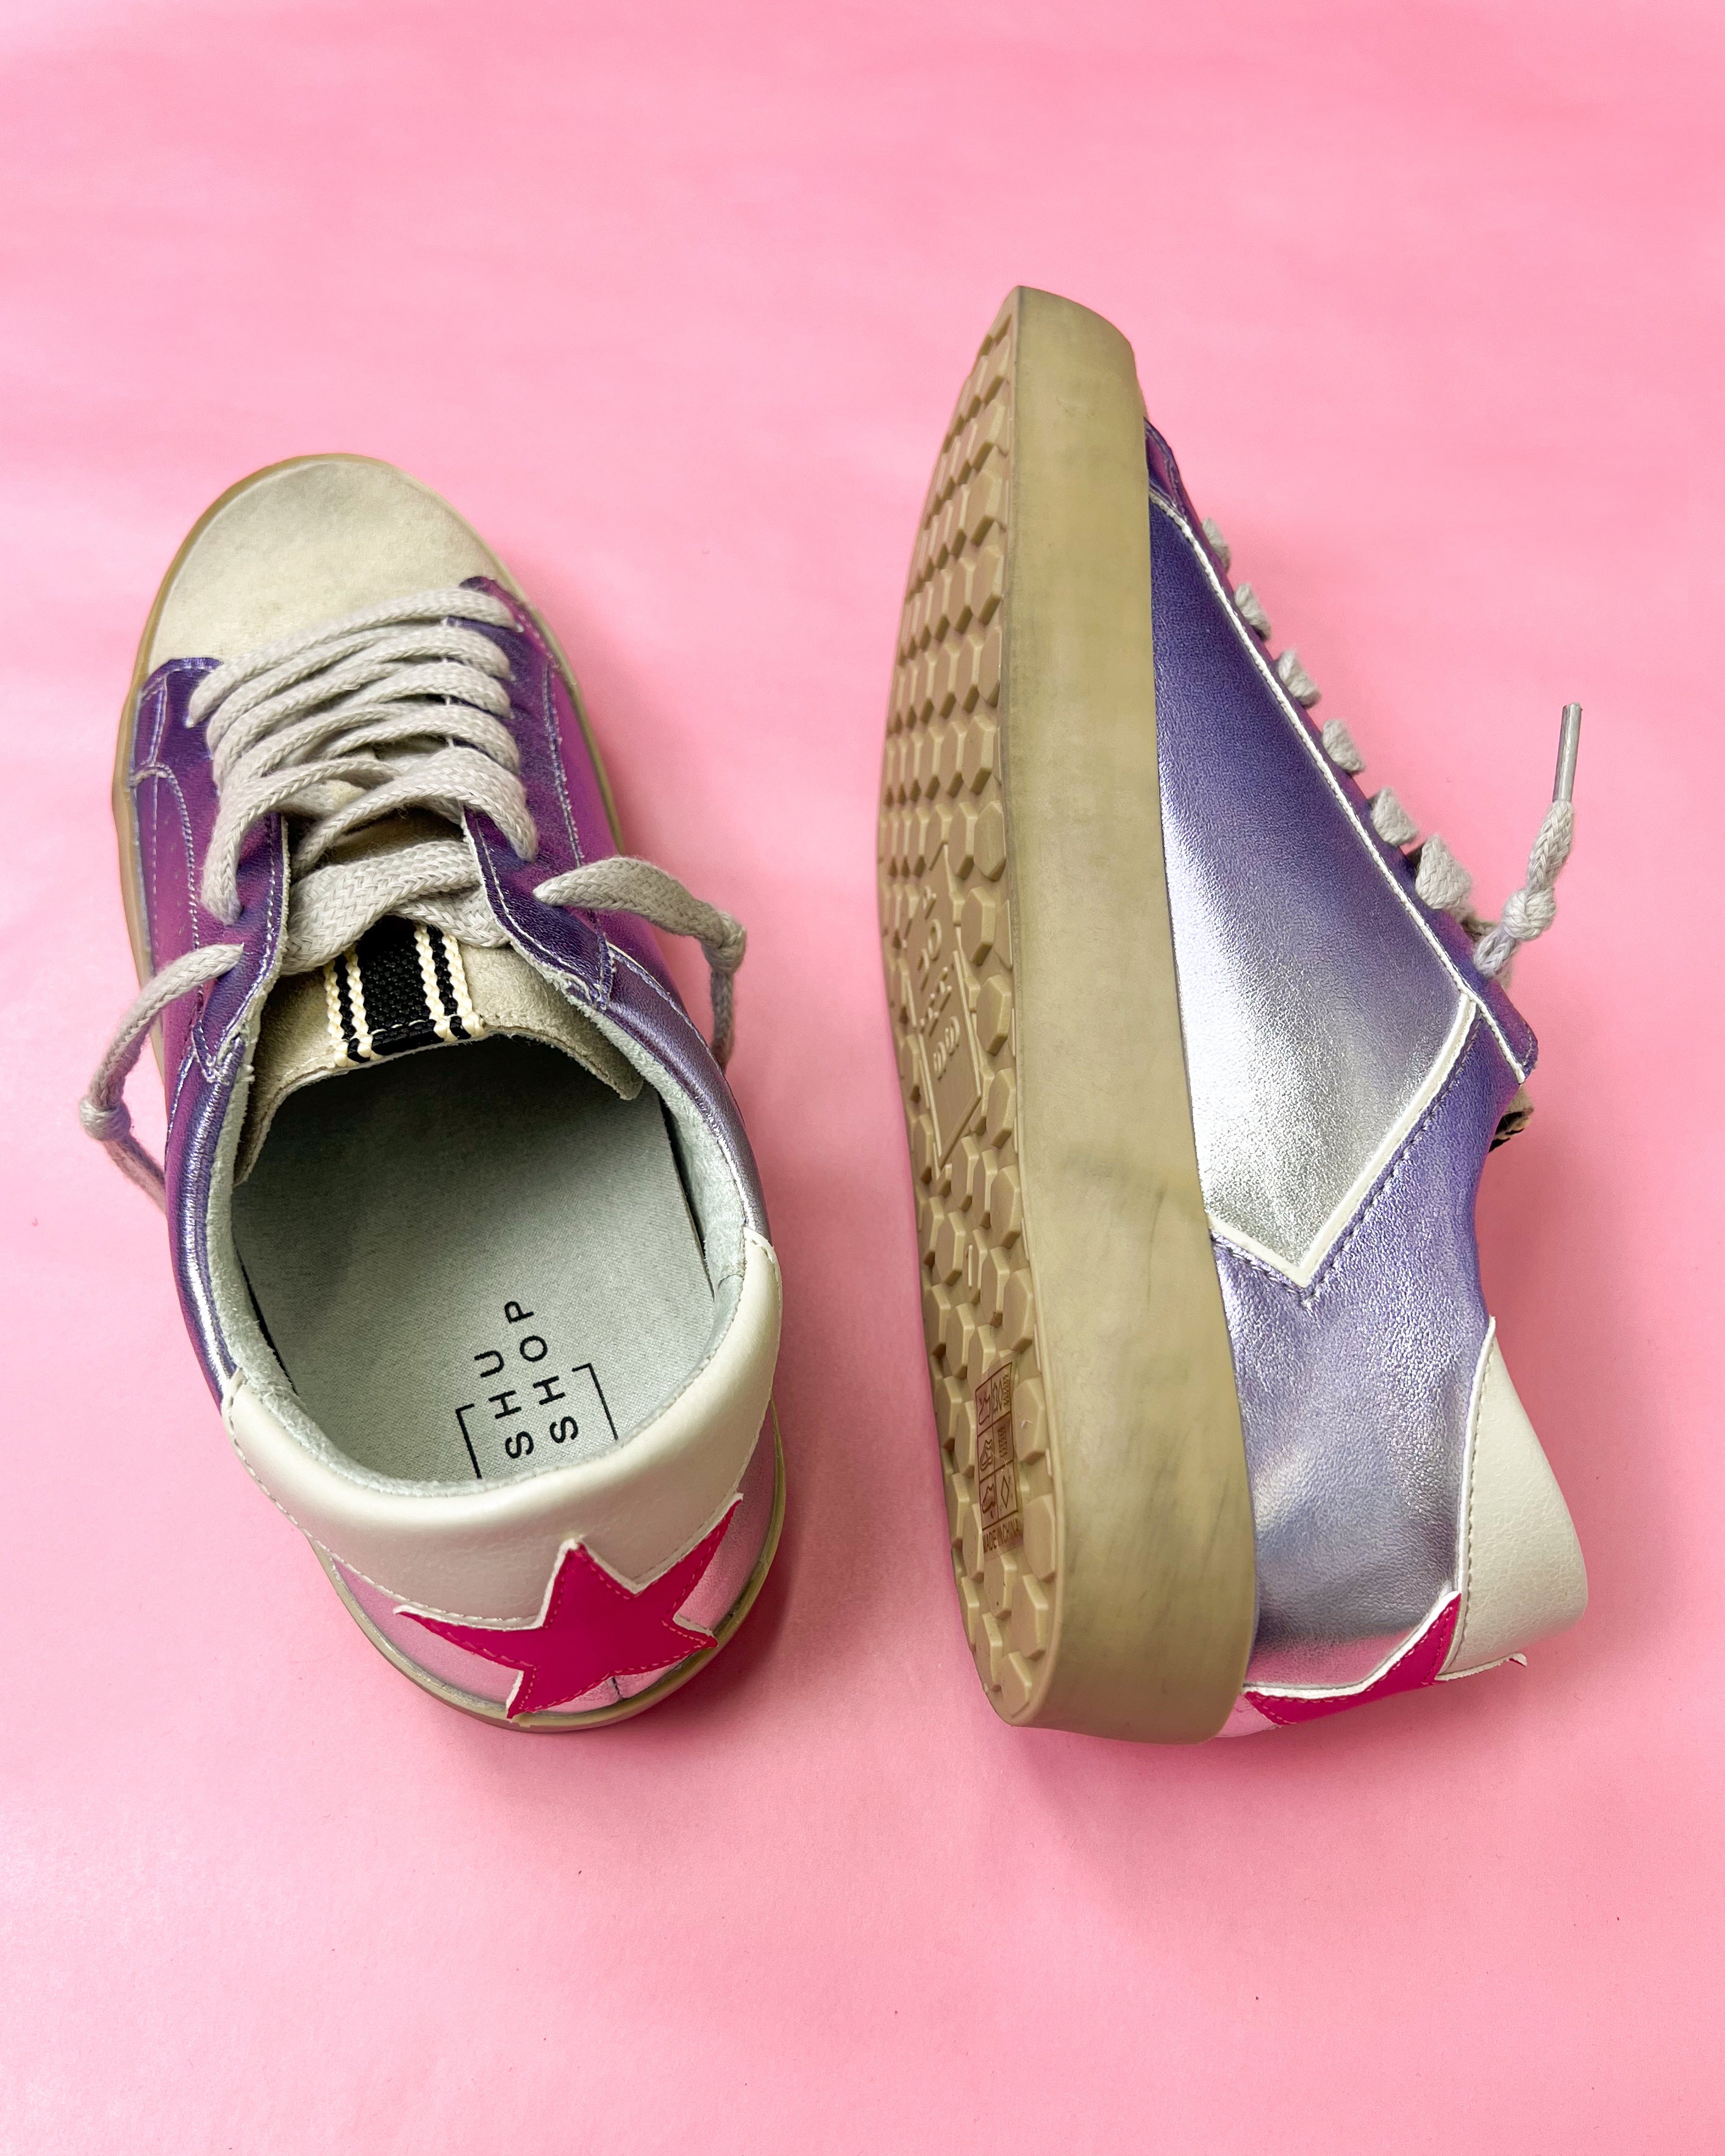 Shu Shop Paisley Star Sneaker -  Lilac